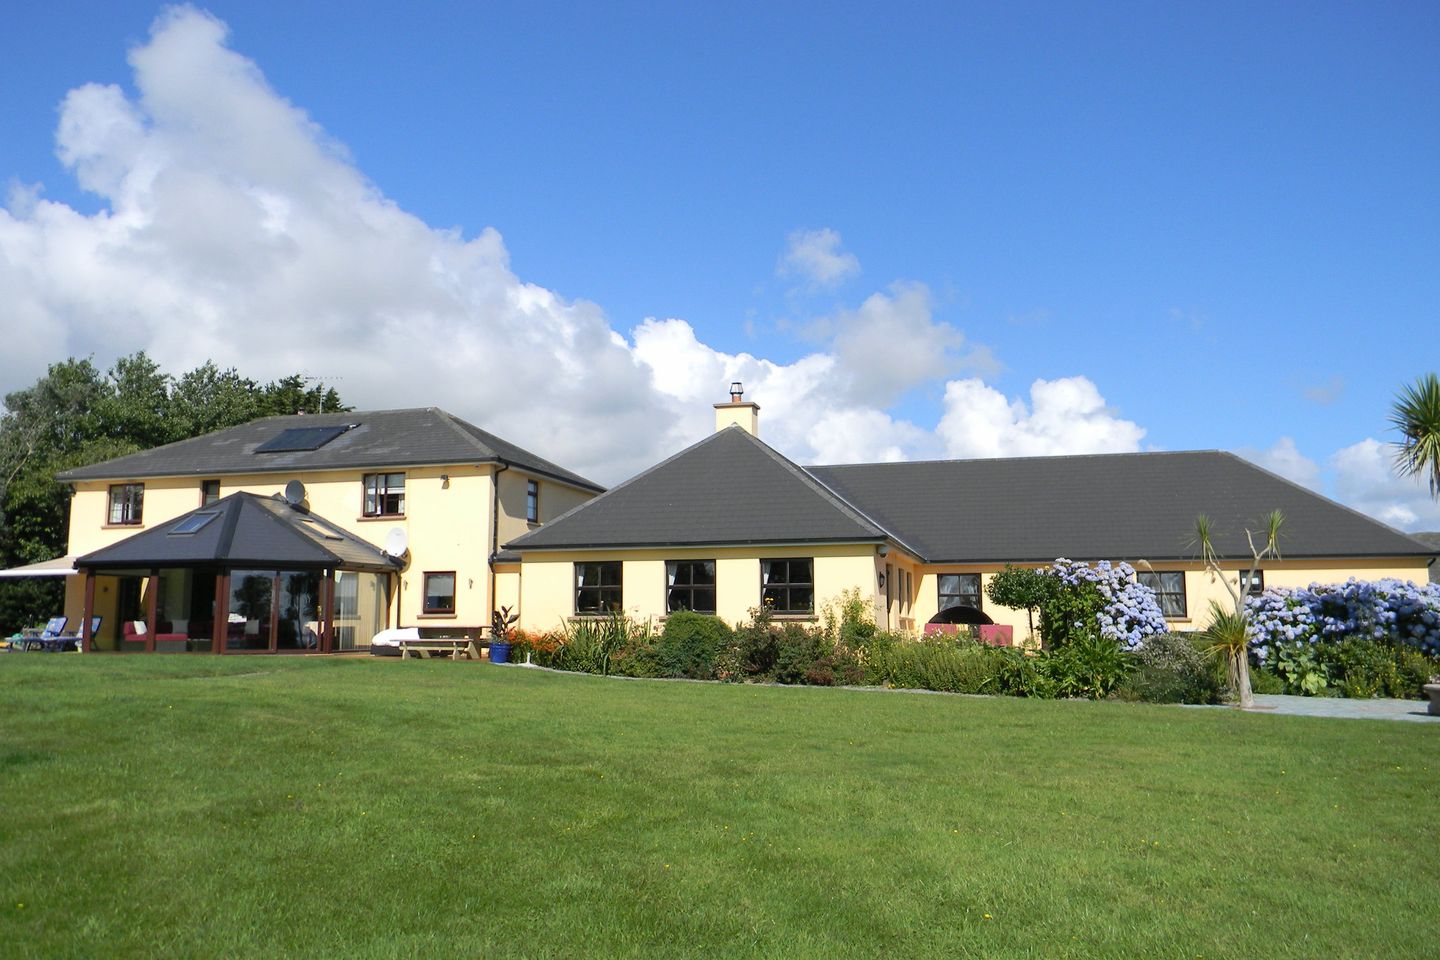 Corthna Lodage Country House, Corthna, Schull, Co. Cork